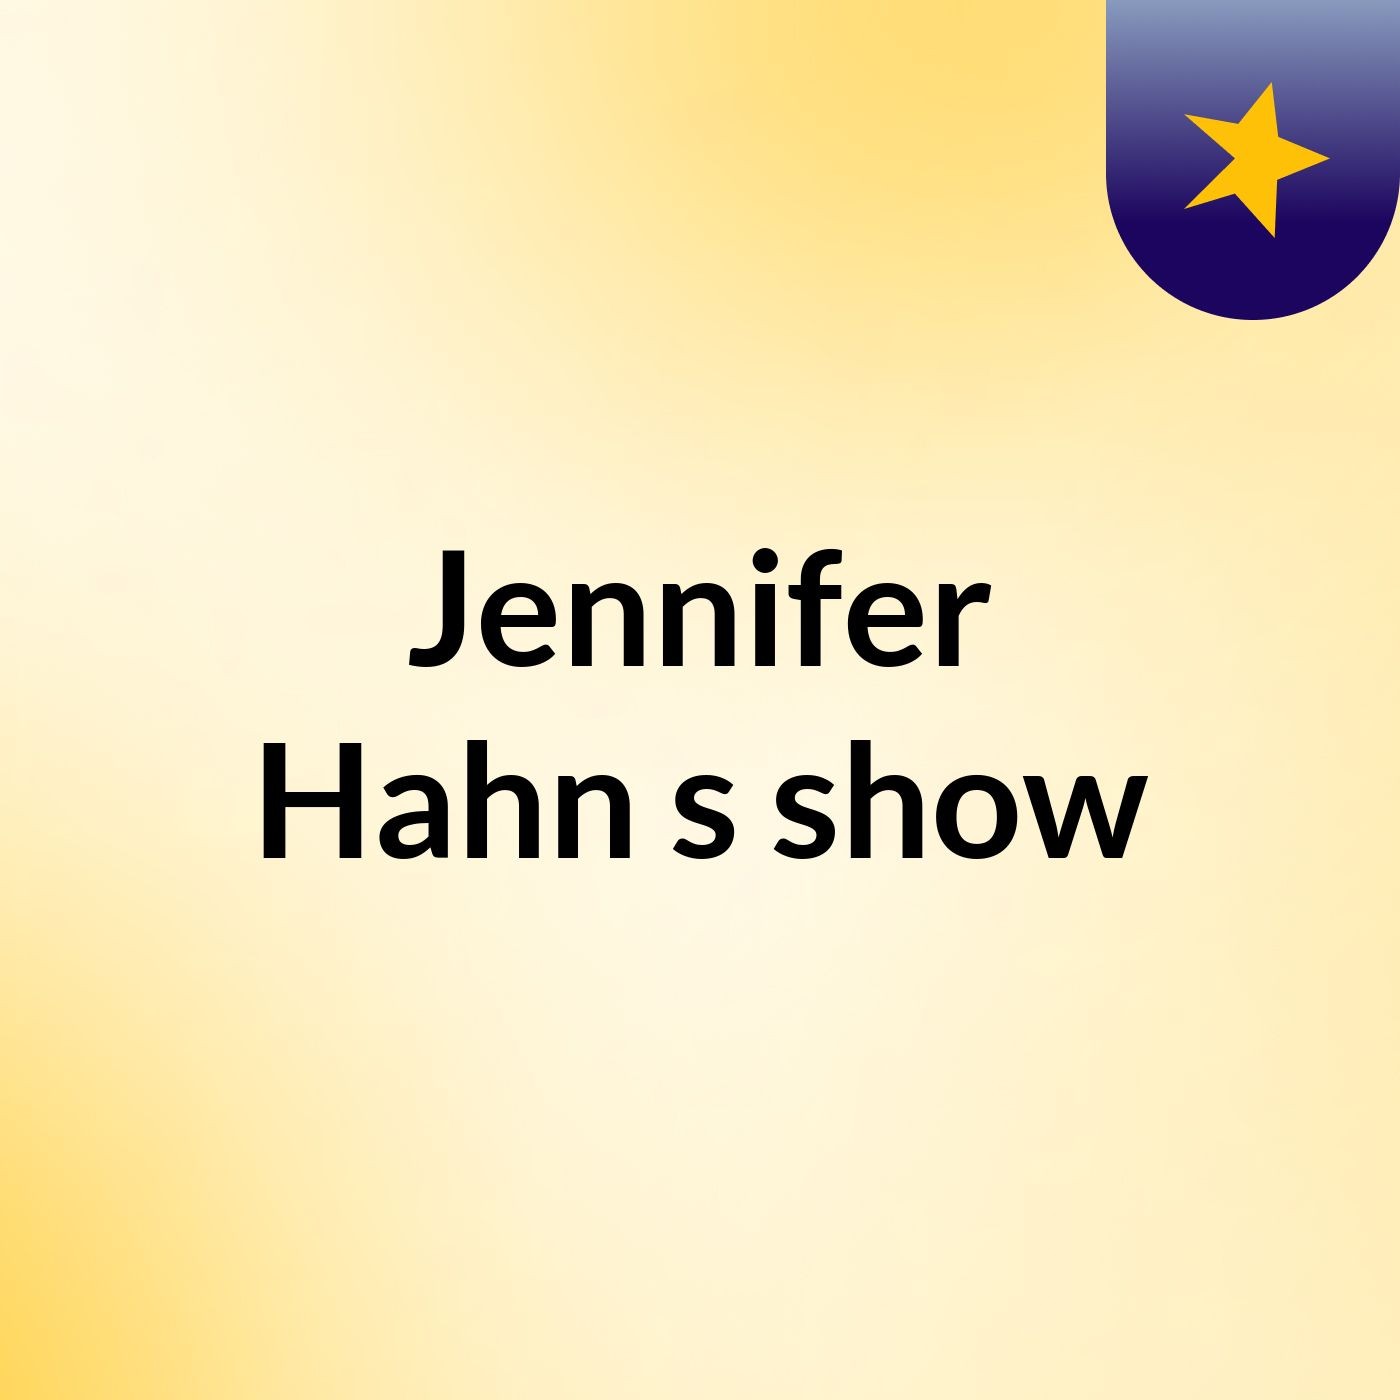 Episode 2 - Jennifer Hahn's show